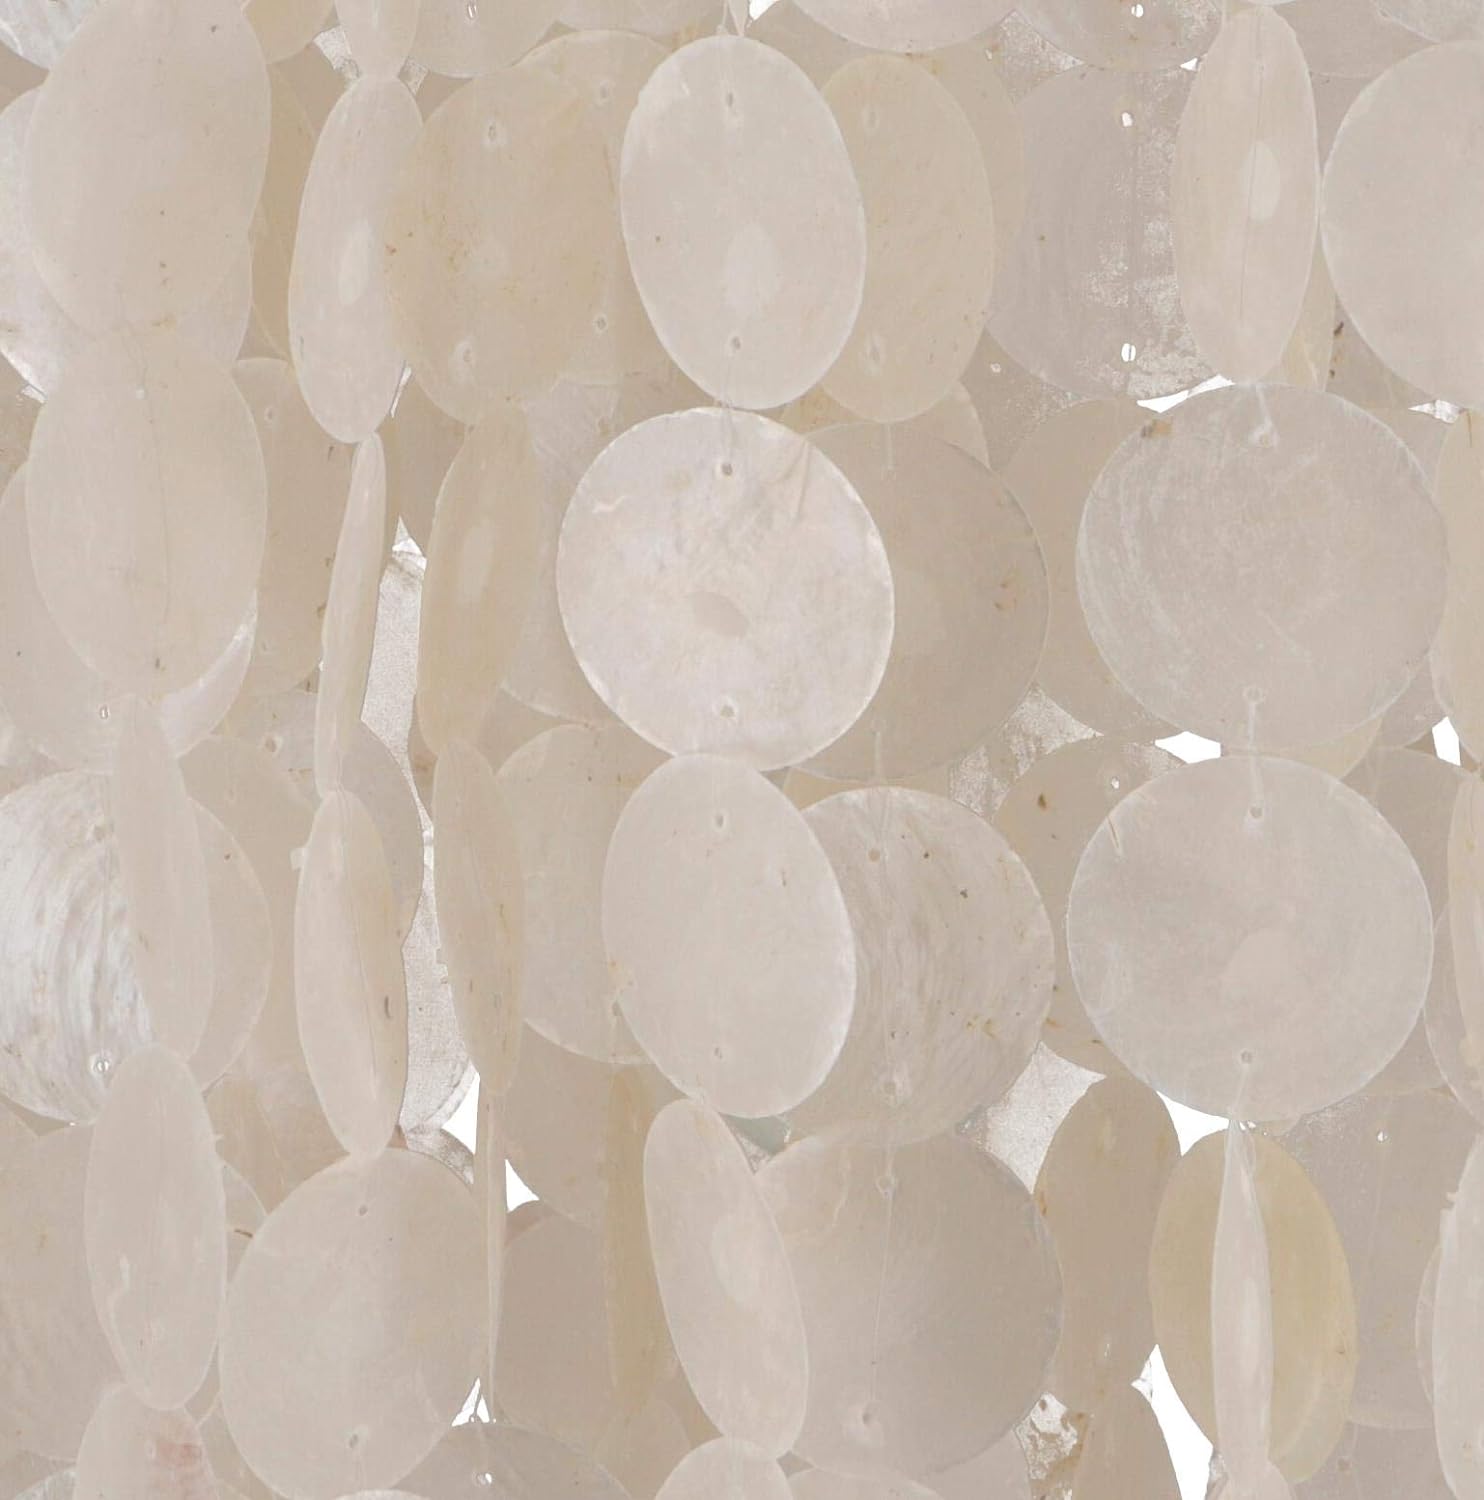 GURU SHOP Ceiling Light, Shell Light from Hundreds of Capiz, Mother of Pearl Plates, Samos Model, Chrome, Shell Discs, 150 x 40 x 40 cm, Pendant Lights Made from Natural Materials